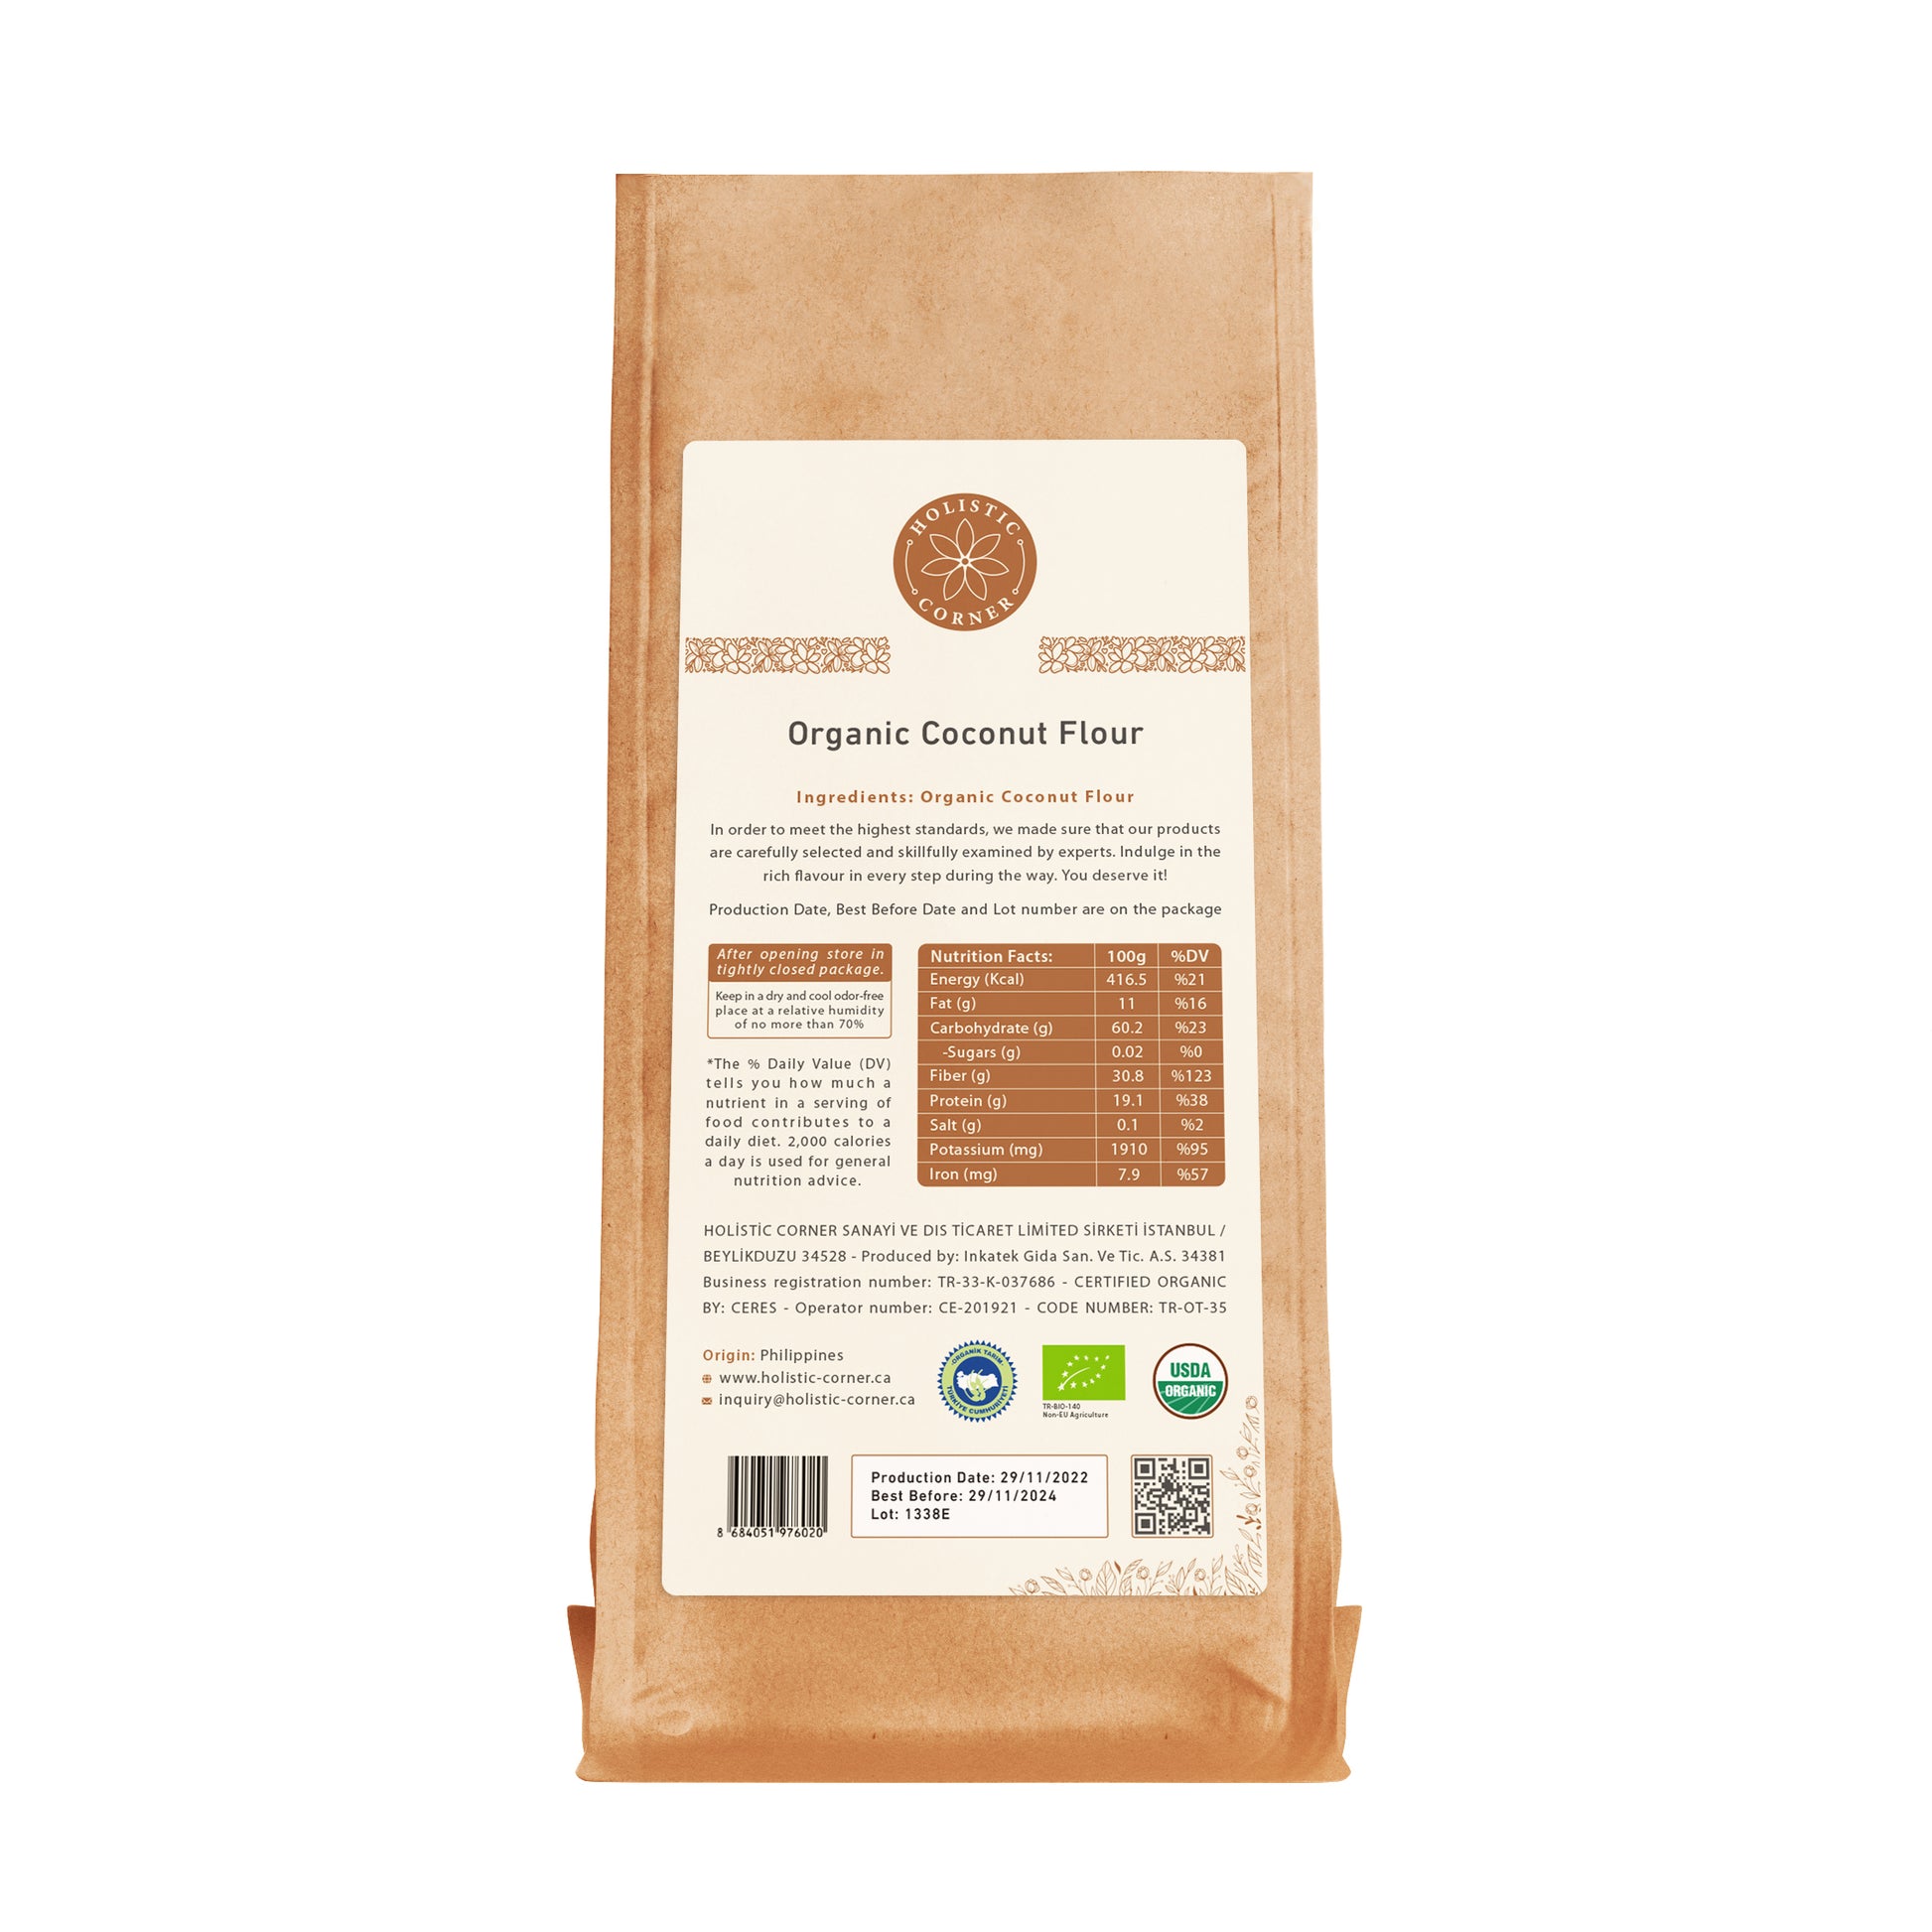 Organic Coconut Flour - 1.65 lb - Gluten-Free and High in Fiber